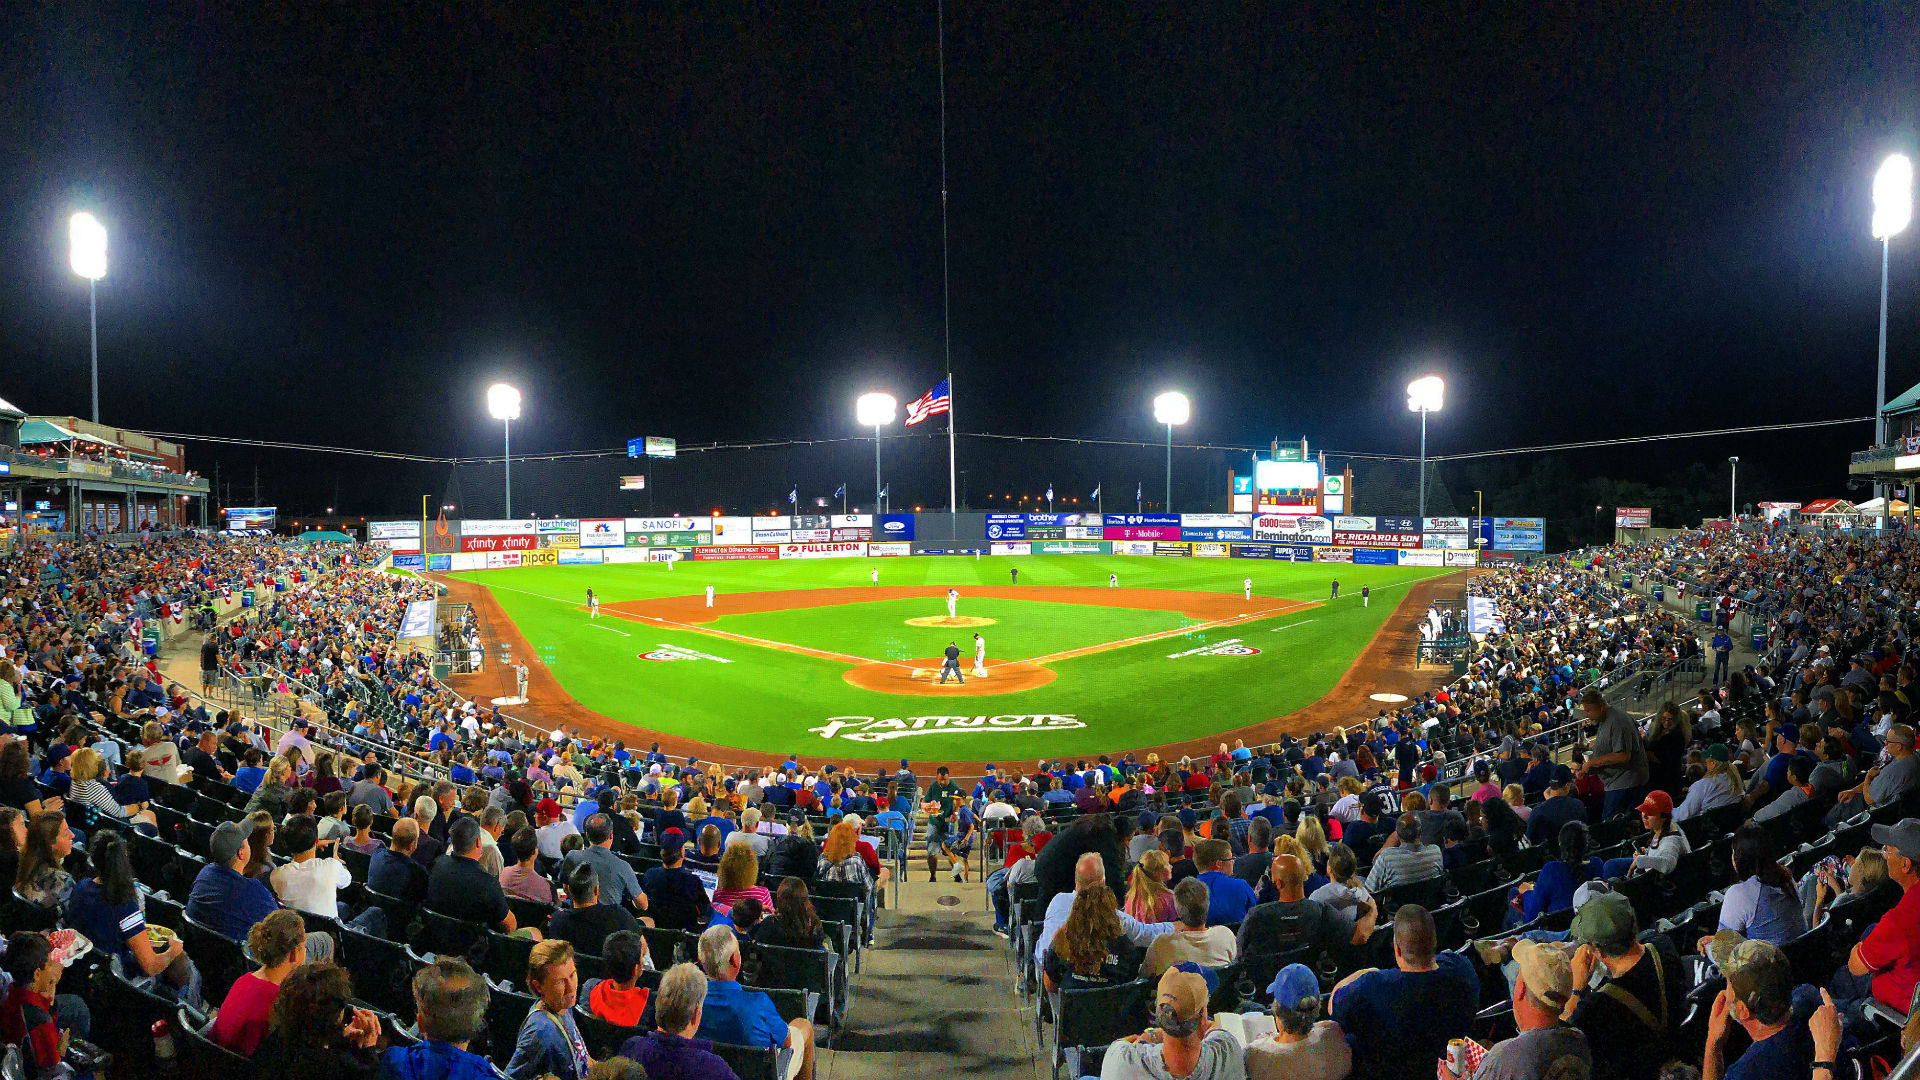 Panoramic shot of TD Bank Ballpark during a baseball game